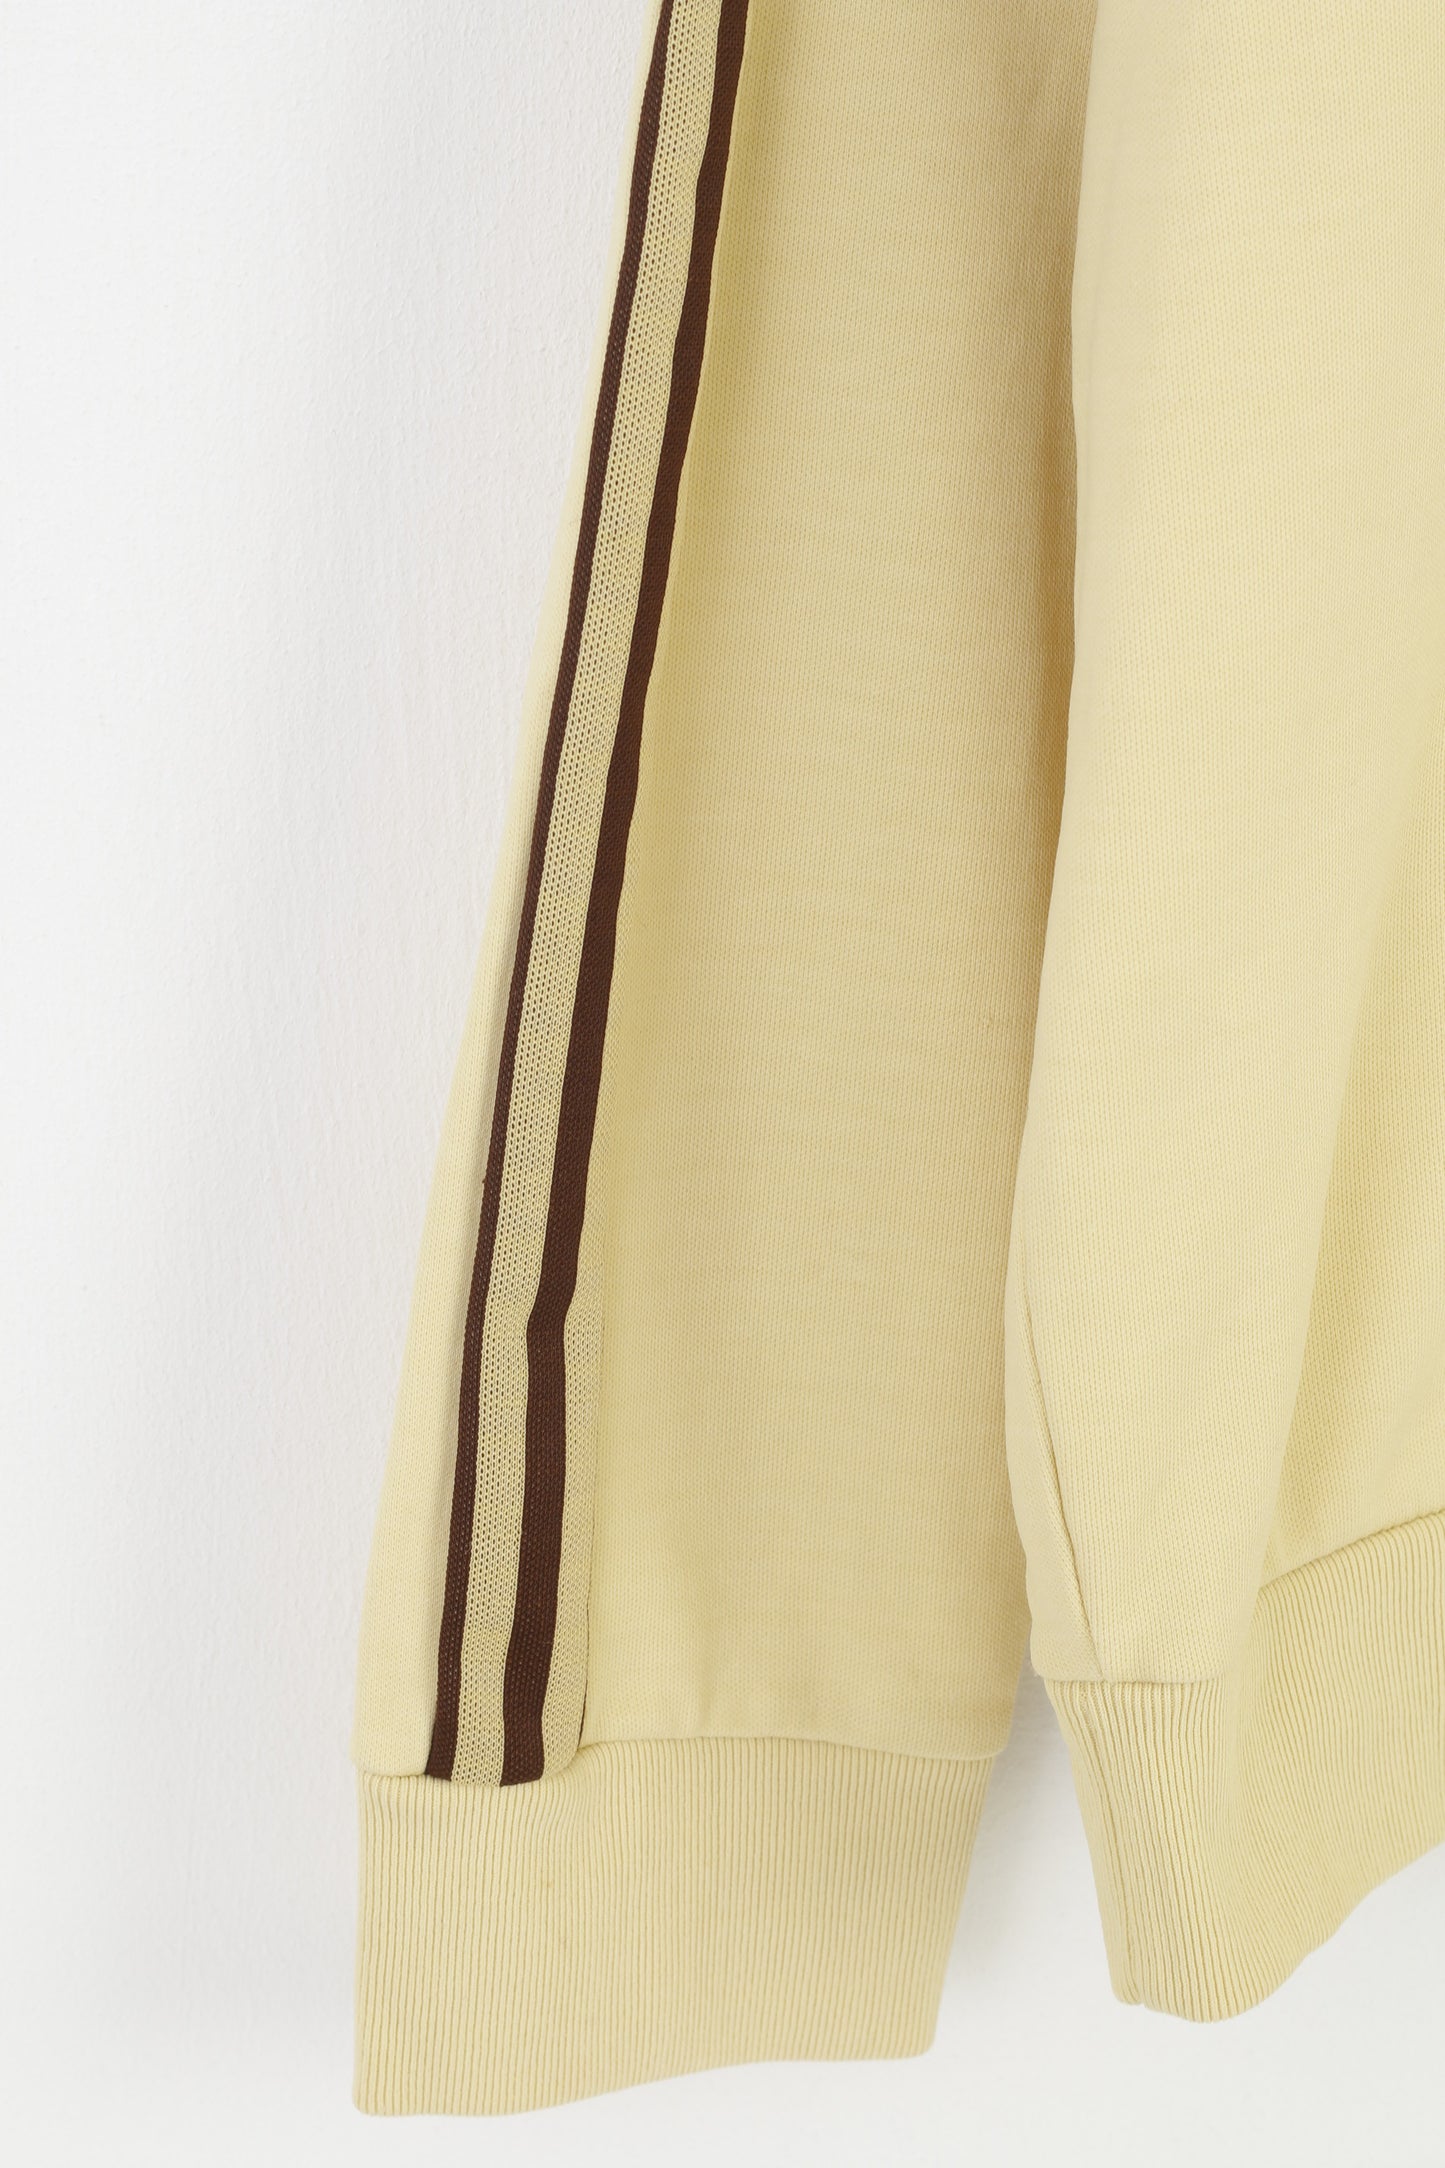 Adidas Men M Sweatshirt Jaune Nylon 90s 3 Stripes vintage Sport Full Zipper Top